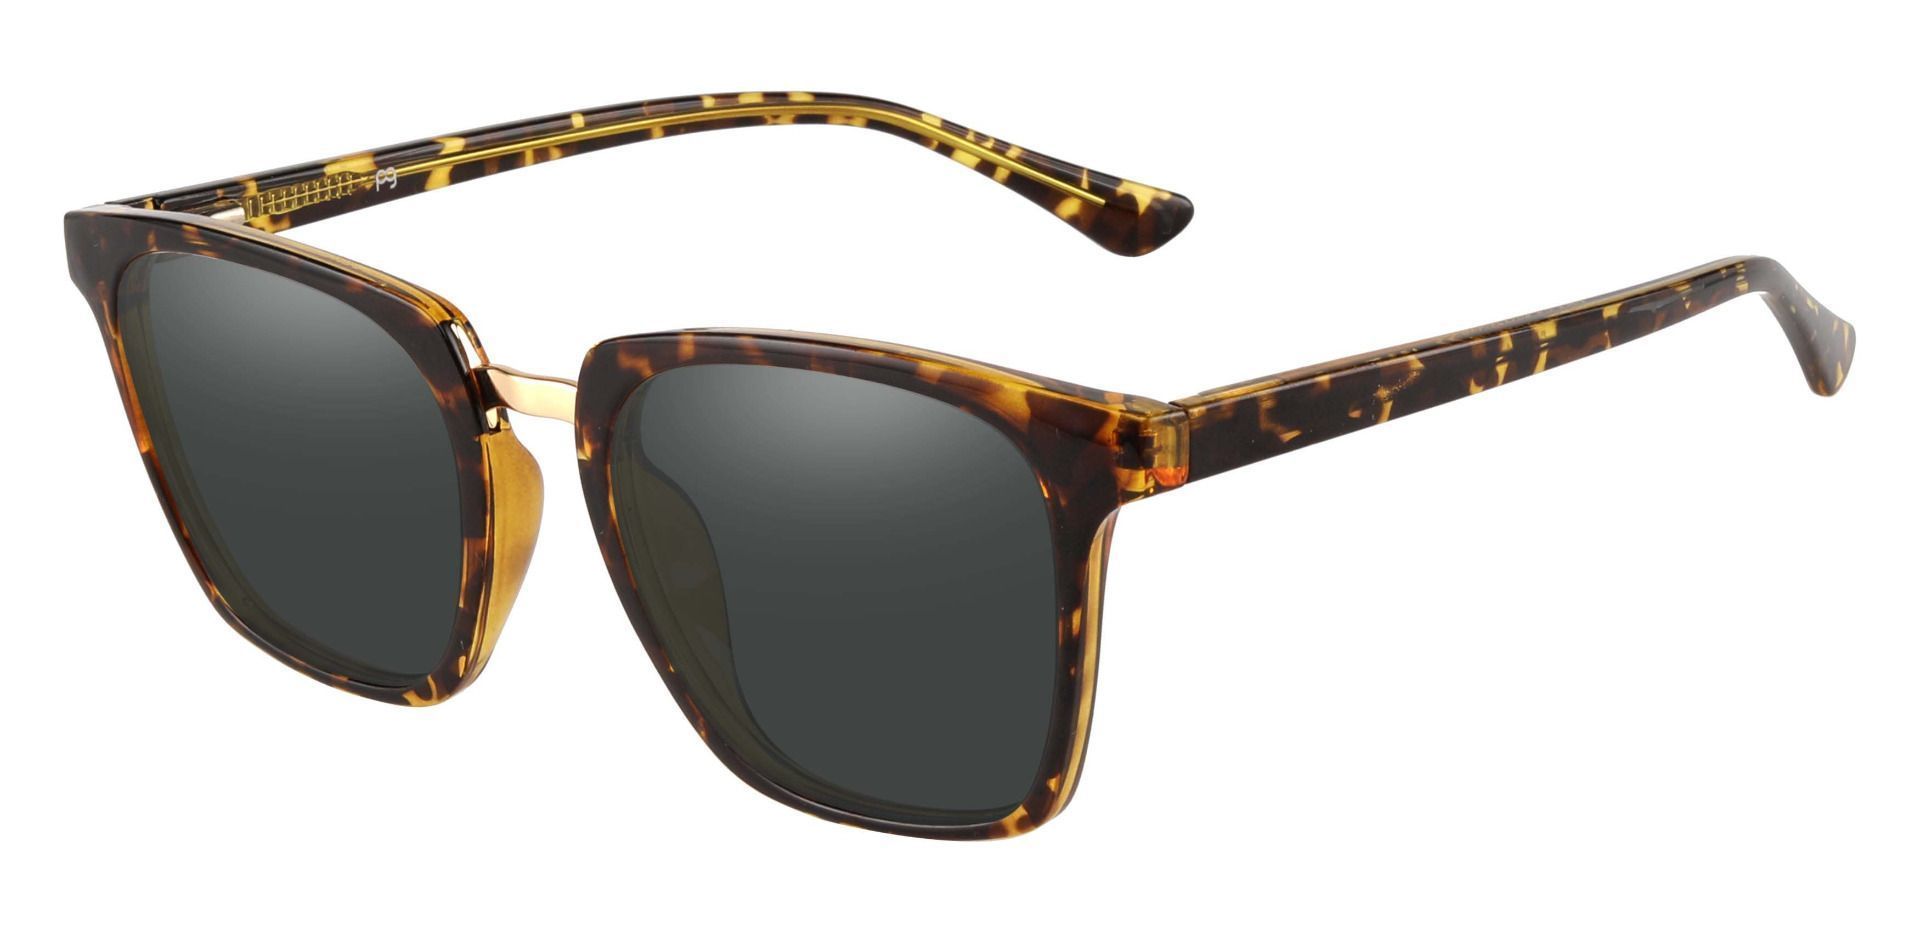 Delta Square Non-Rx Sunglasses - Tortoise Frame With Gray Lenses